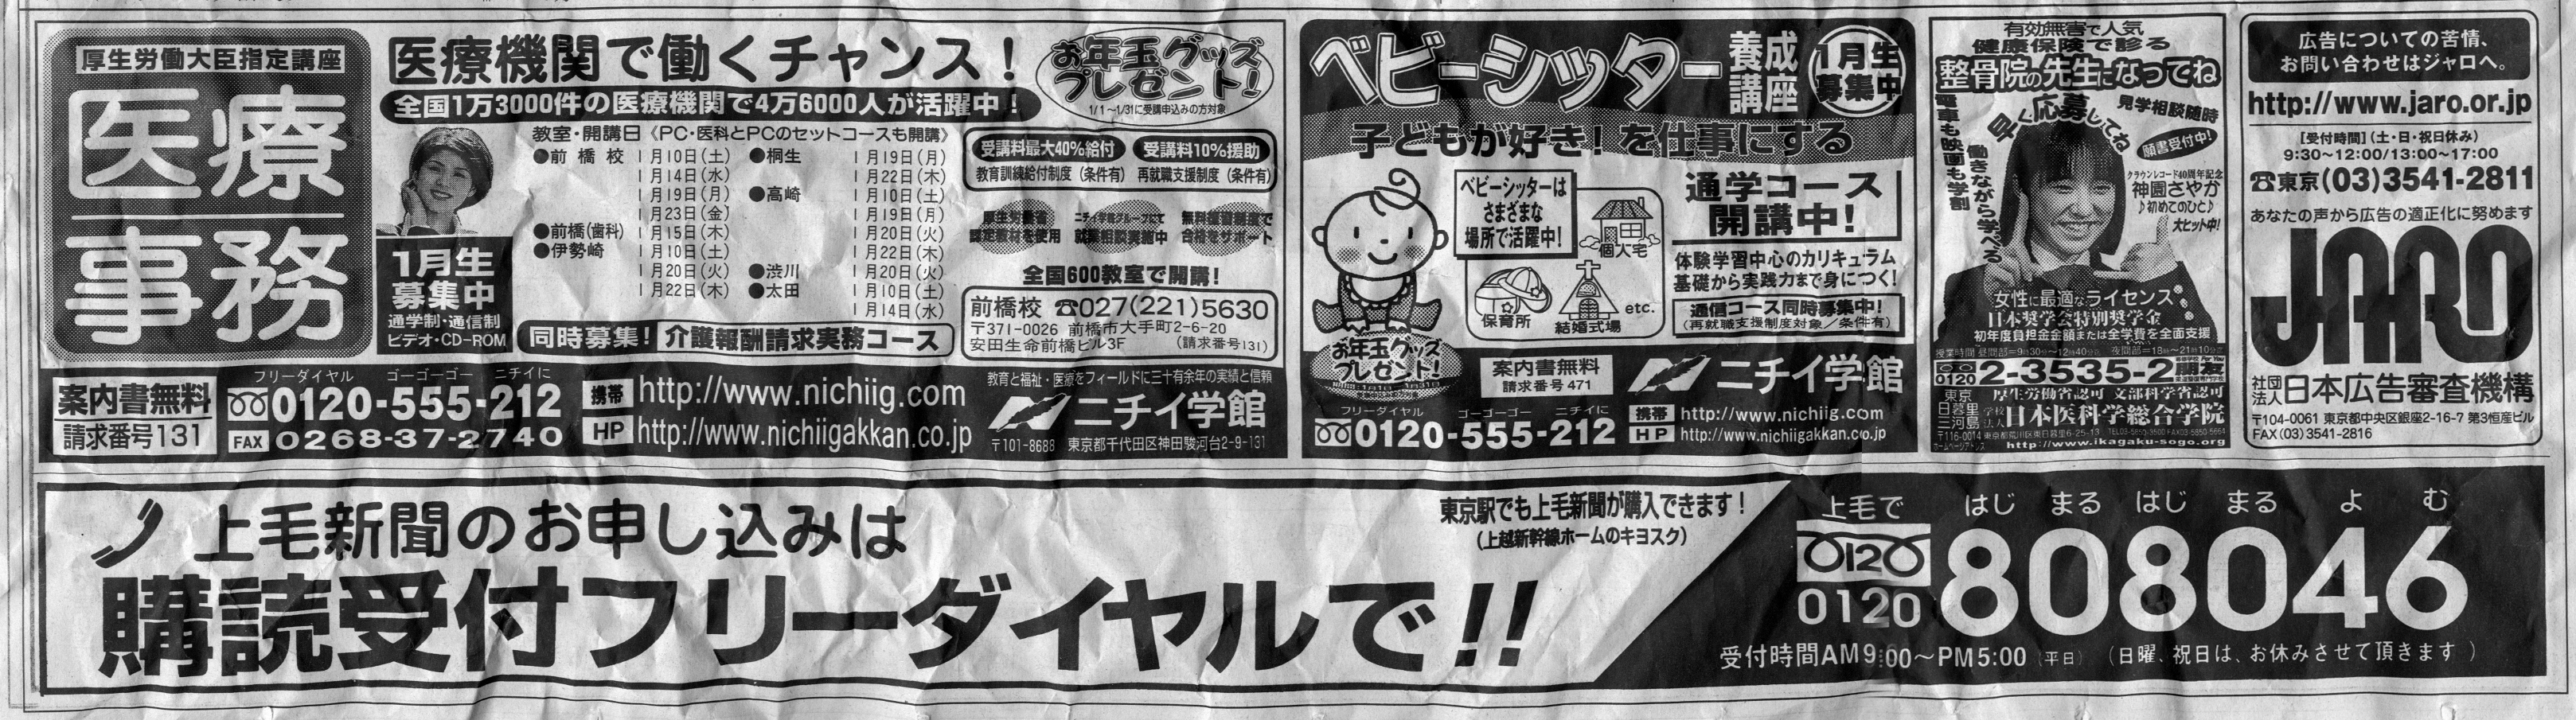 fabrics texture newspaper paper typography chinese japanese character advertisement news